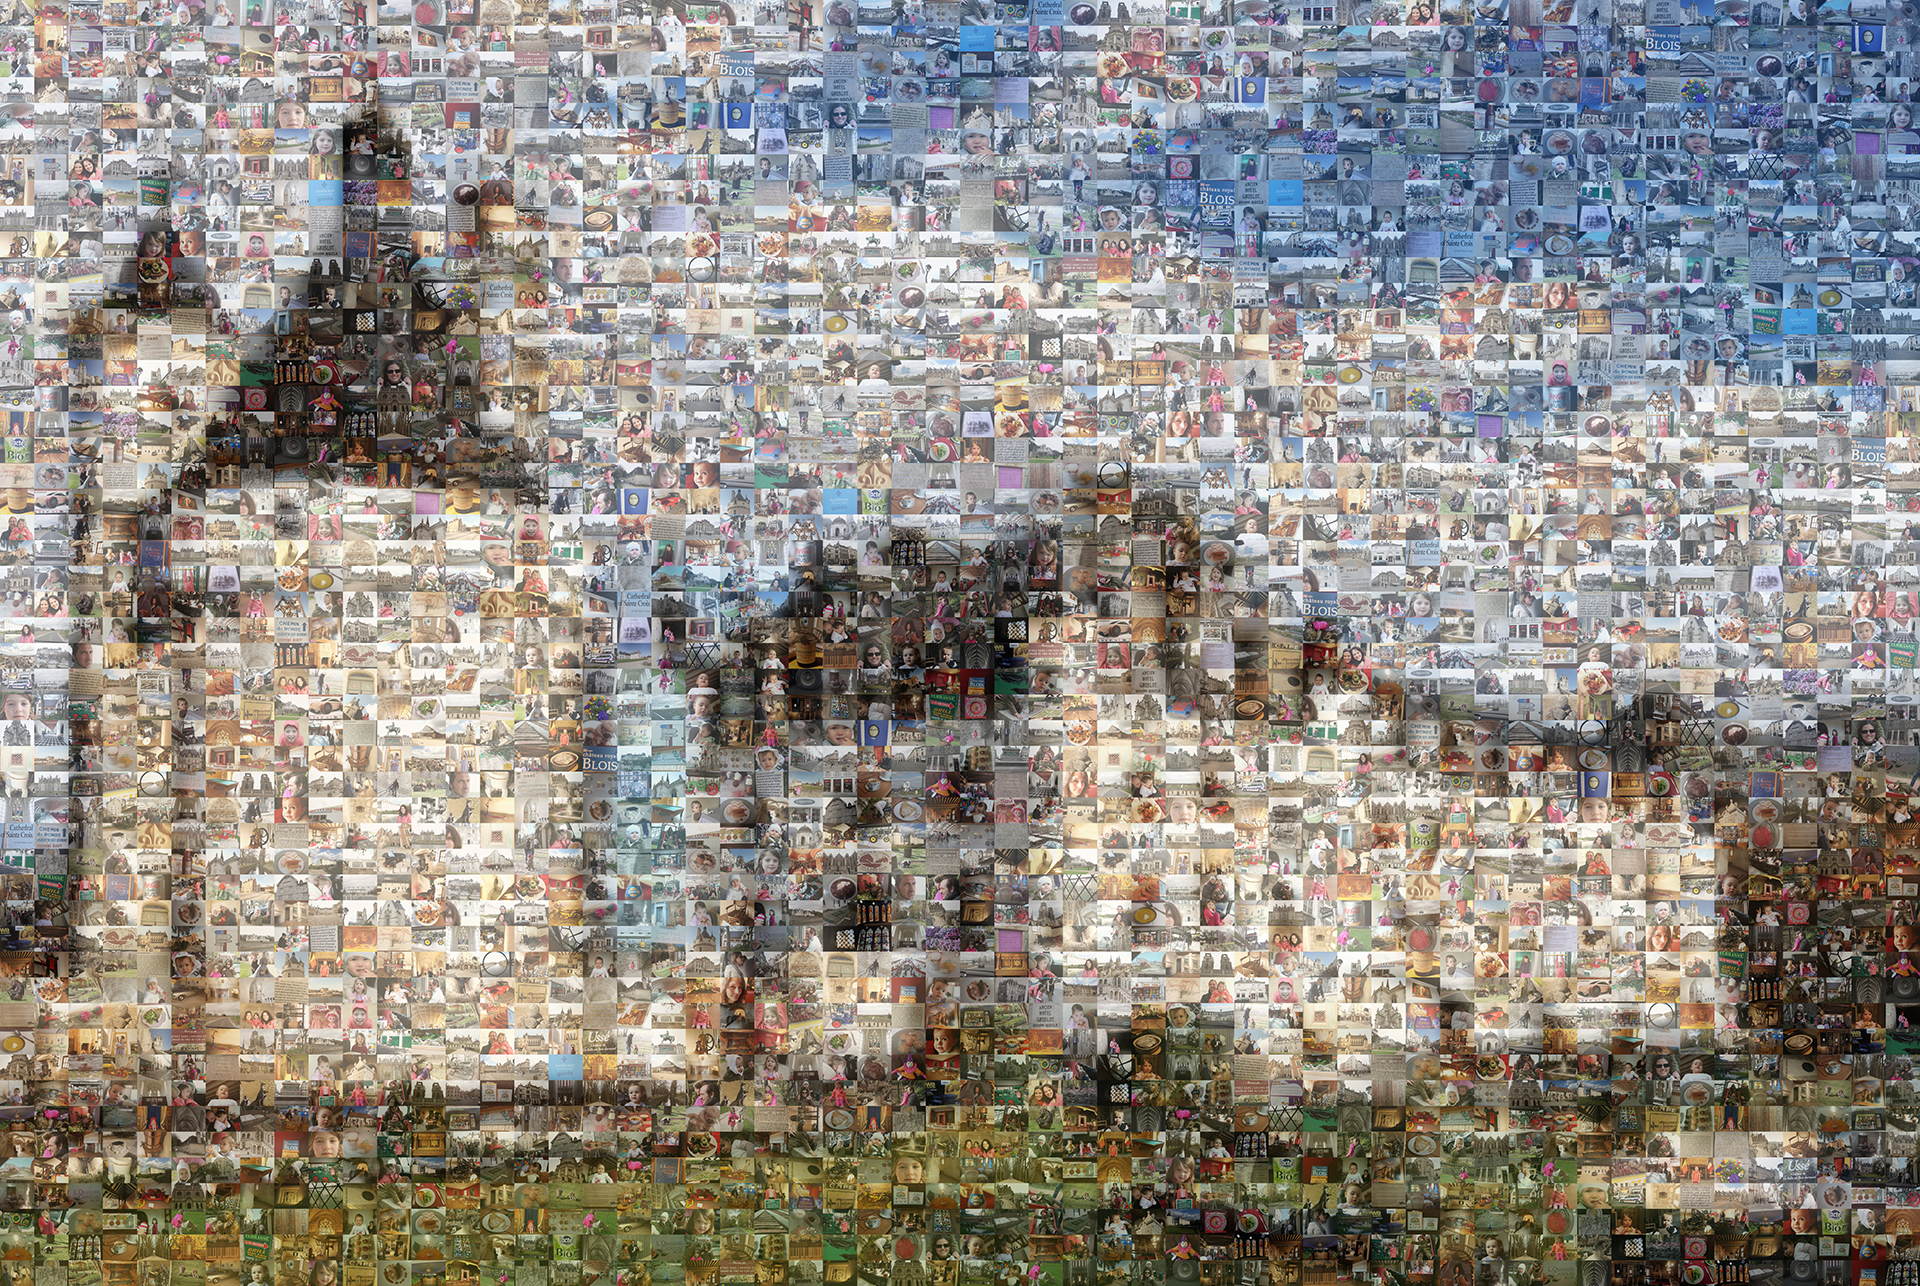 photo mosaic created using 456 family vacation photos